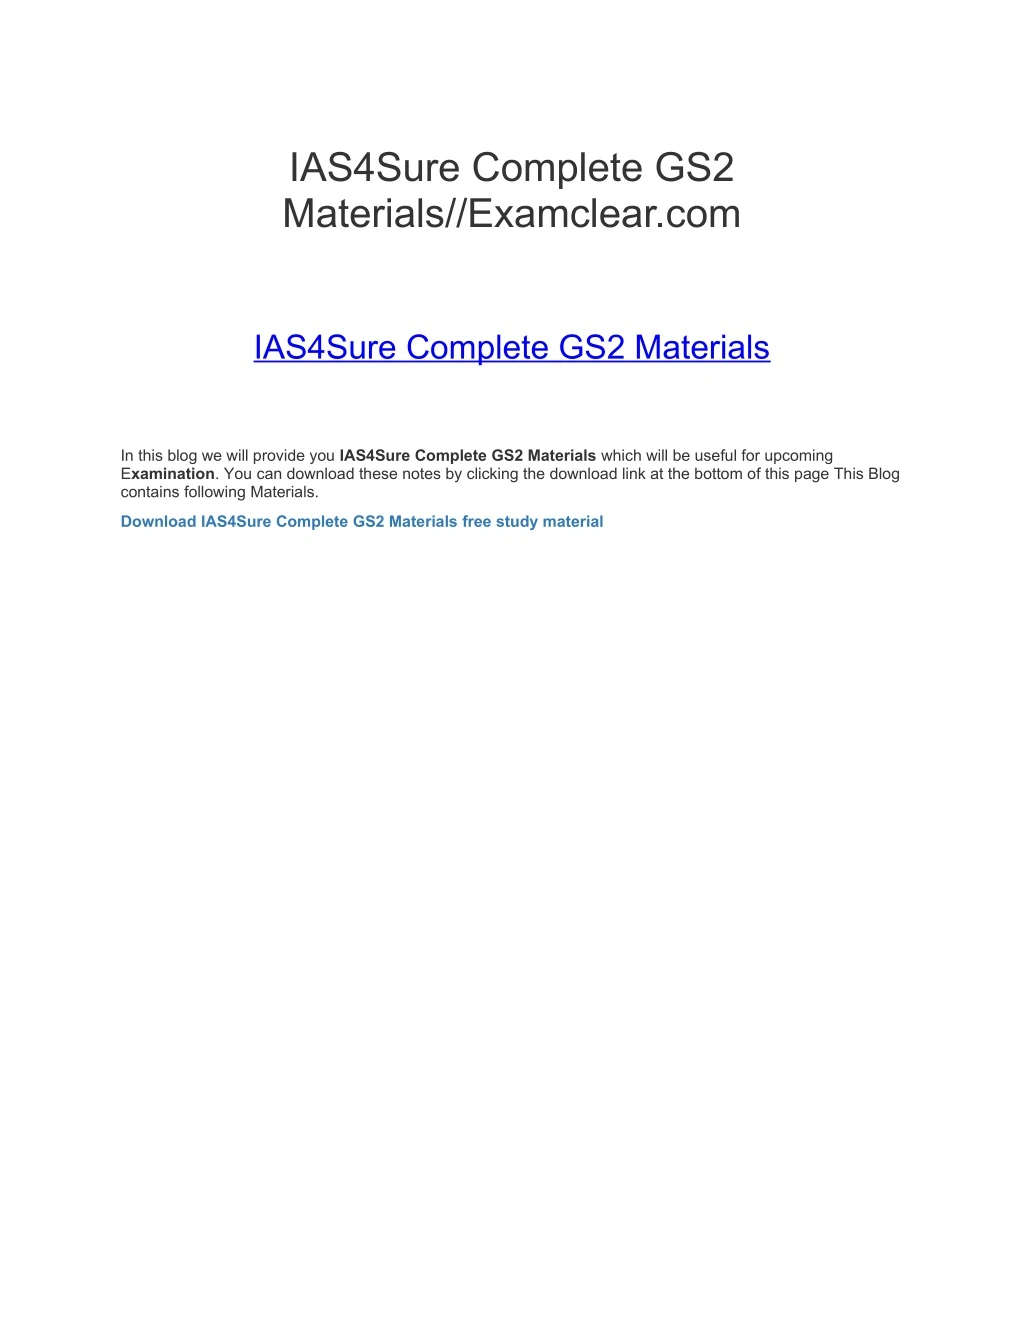 ias4sure complete gs2 materials examclear com